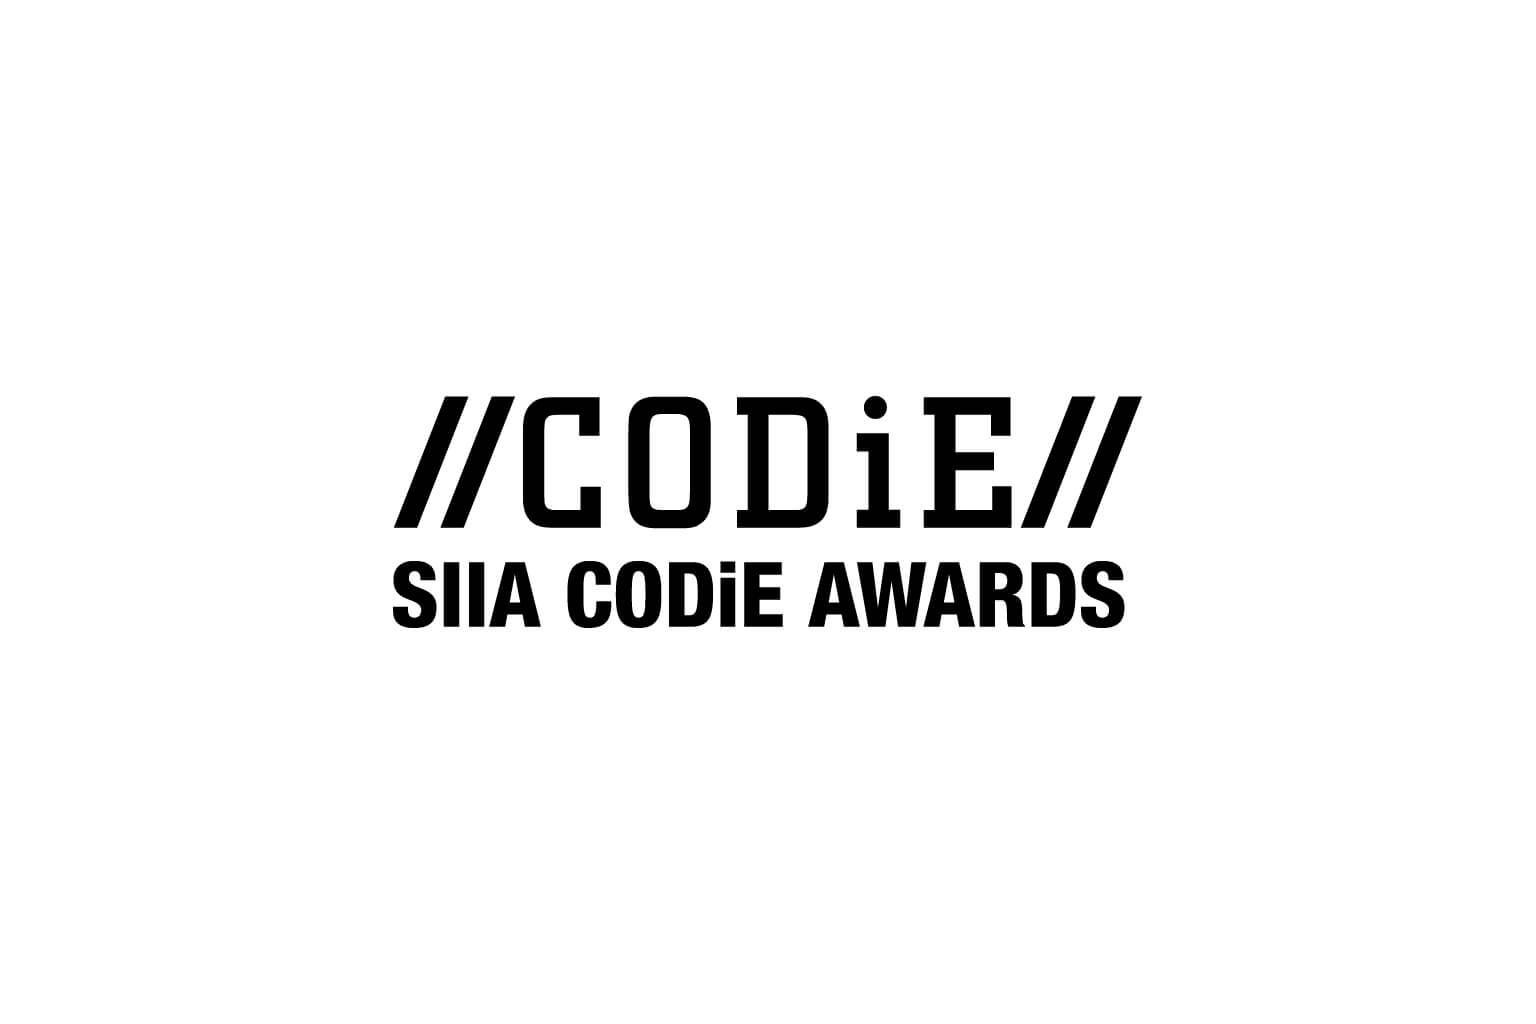 SIIA CODiE Awards 